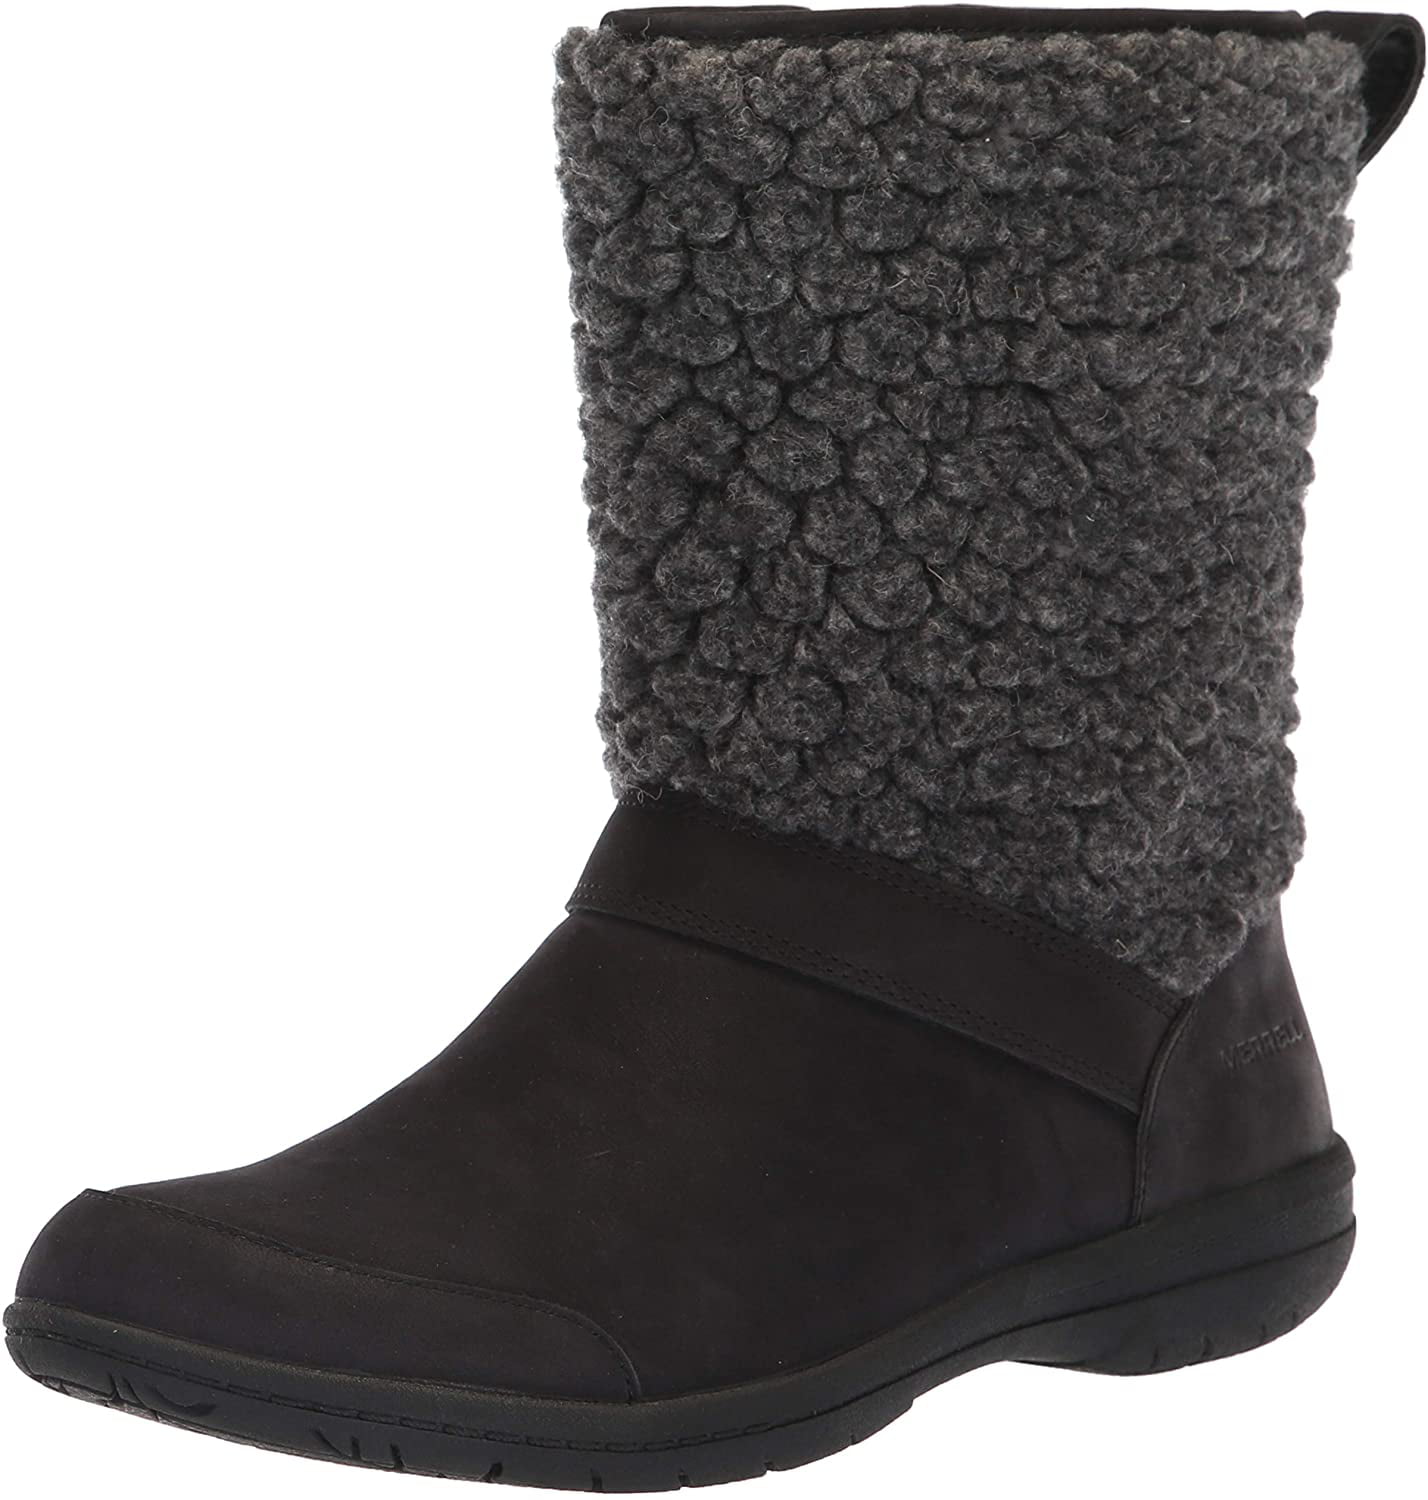 Merrell Women's Encore Kassie Tall Wool Fashion Boot, Black, 5 M US ...